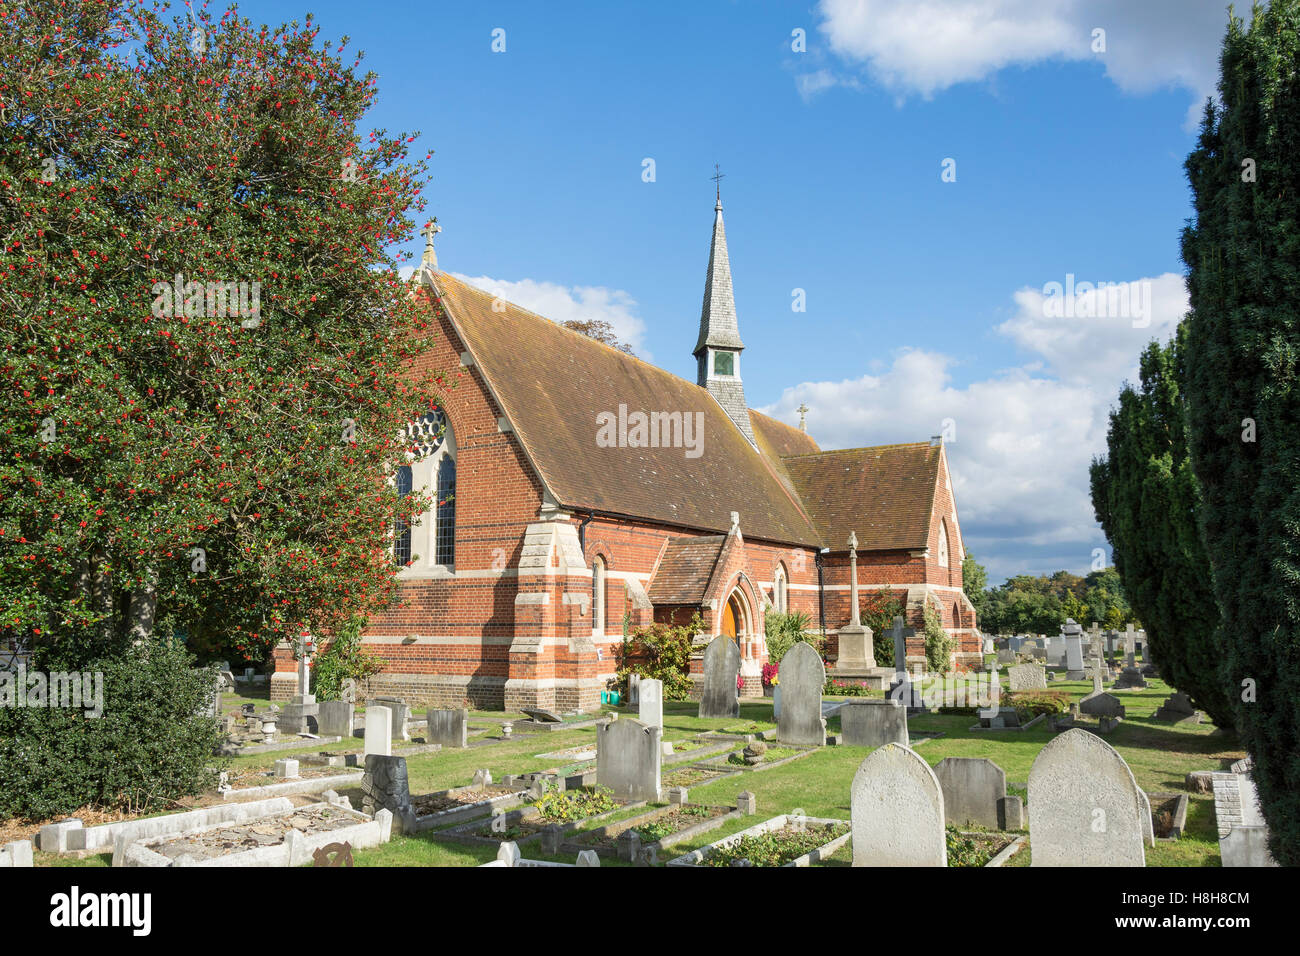 Parish Church of St John the Baptist, Eton Wick Road, Eton Wick, Berkshire, England, United Kingdom Stock Photo